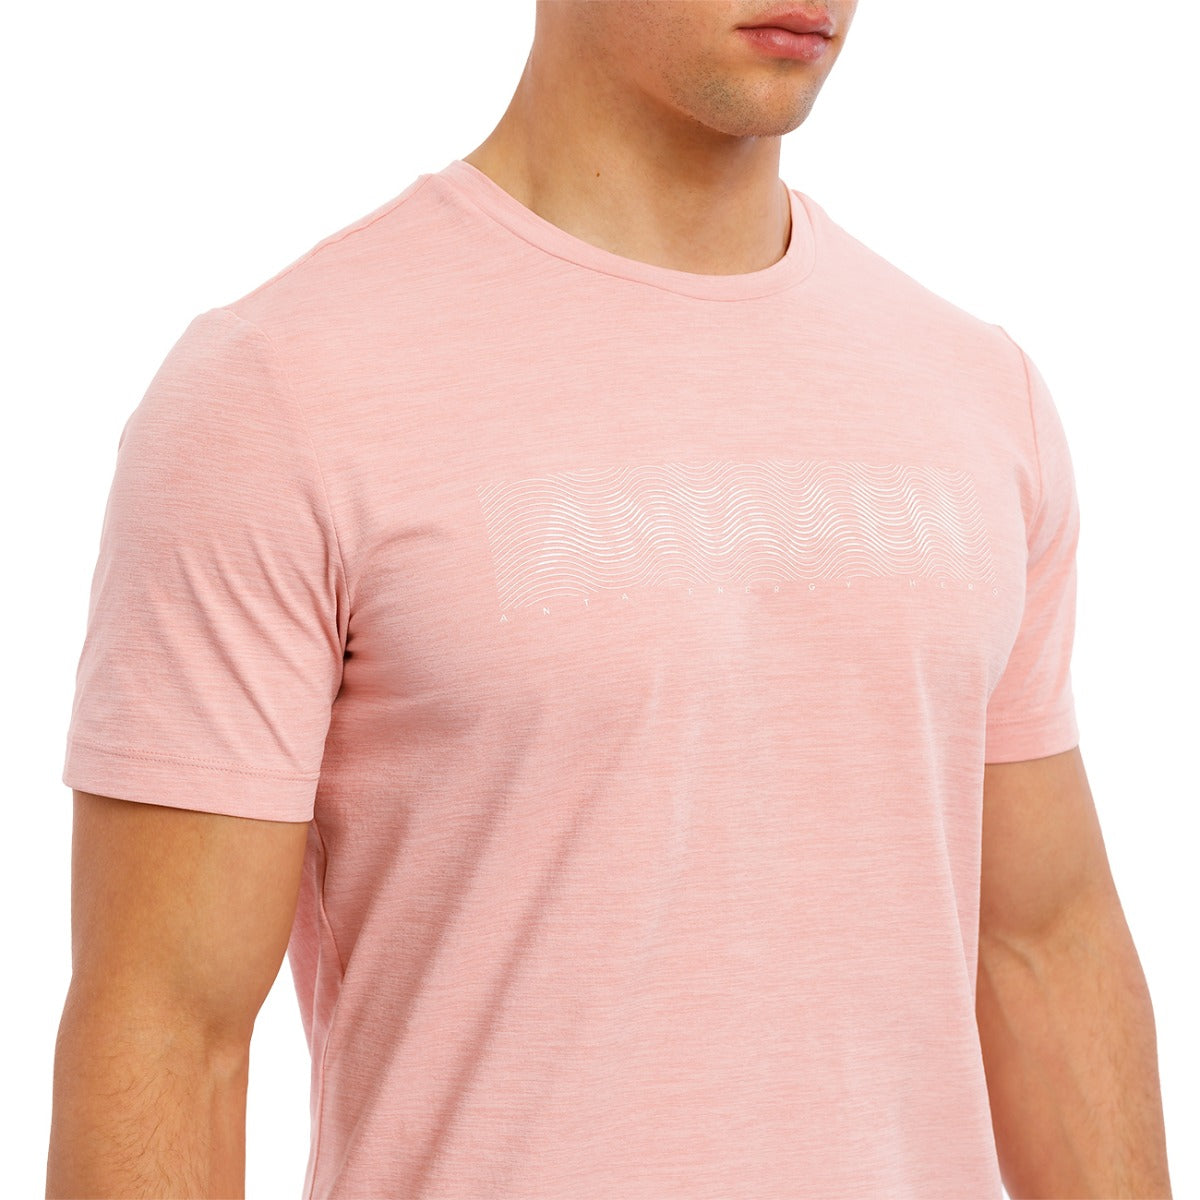 Anta Cross Training T-Shirt For Men, Pink